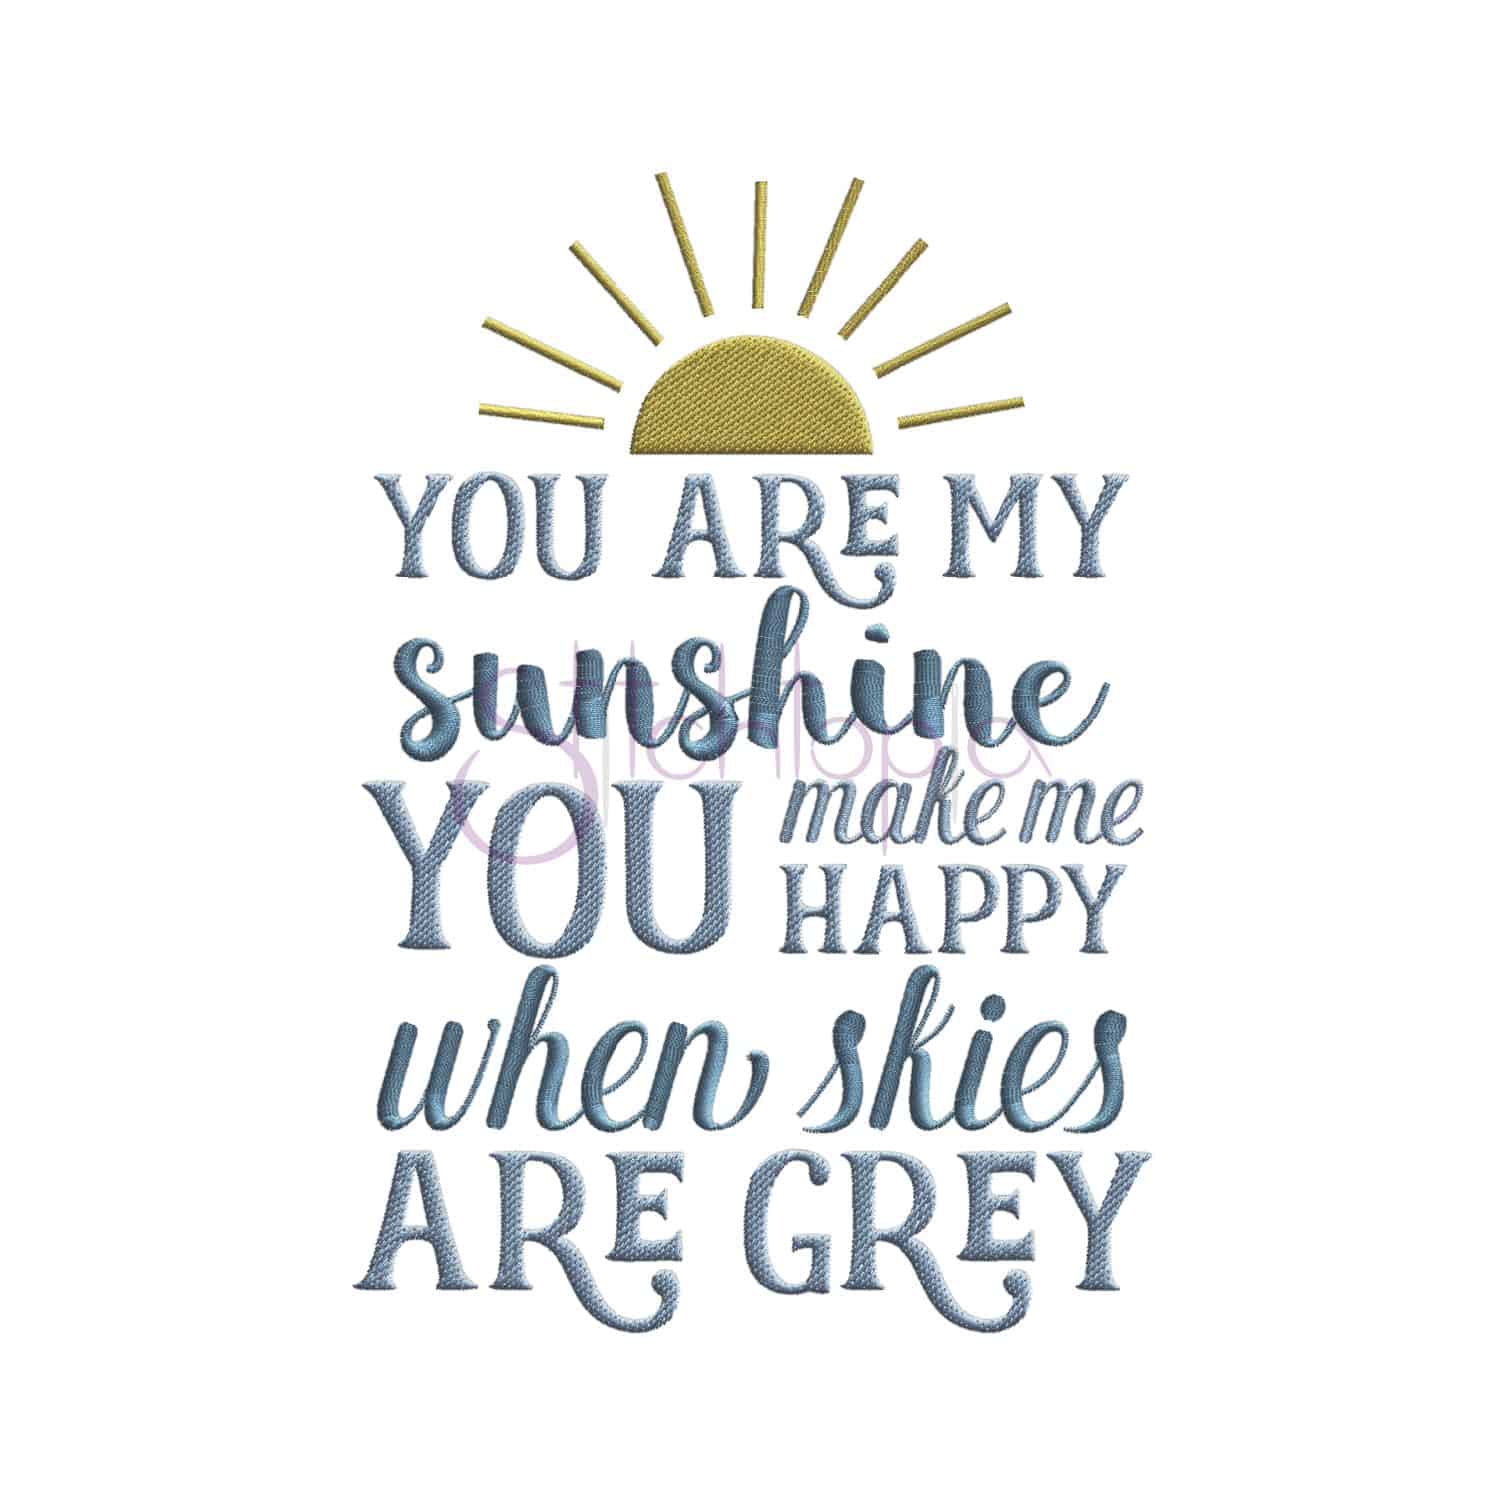 You Are My Sunshine Embroidery Design | Stitchtopia